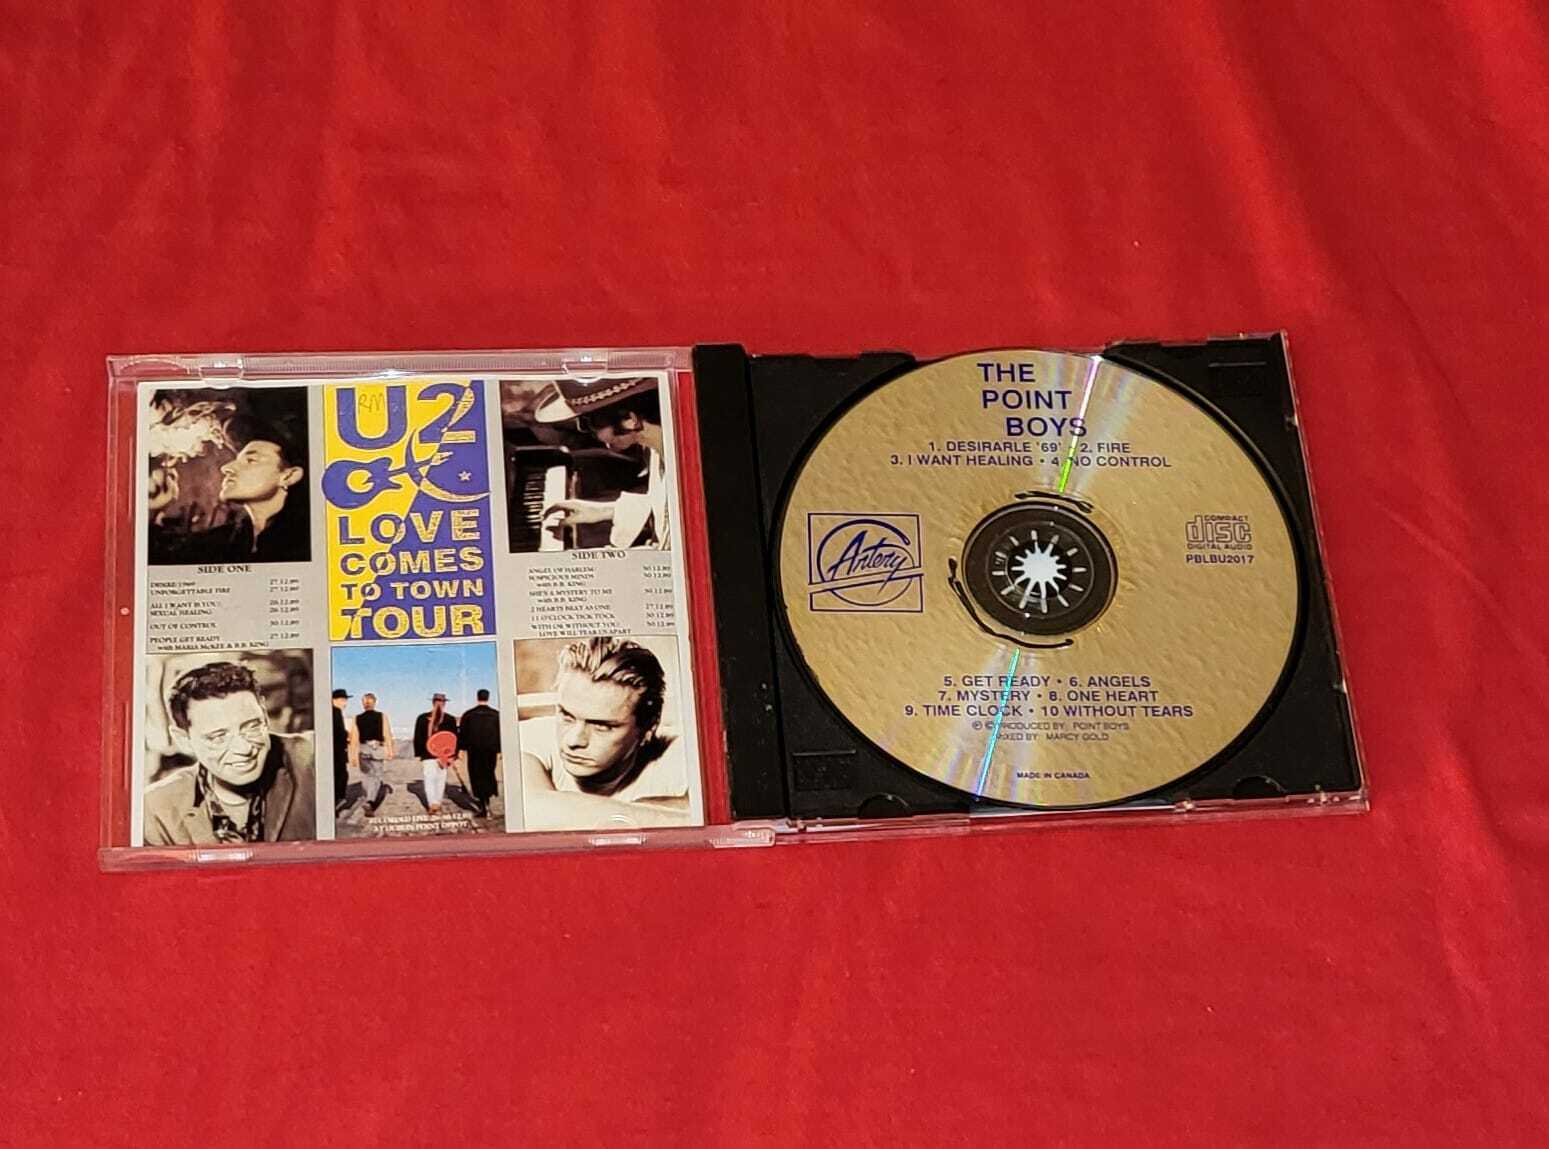 U2 Bono Rare Collectible Cd Makes The Point U2 Love Comes To Town Tour 1989